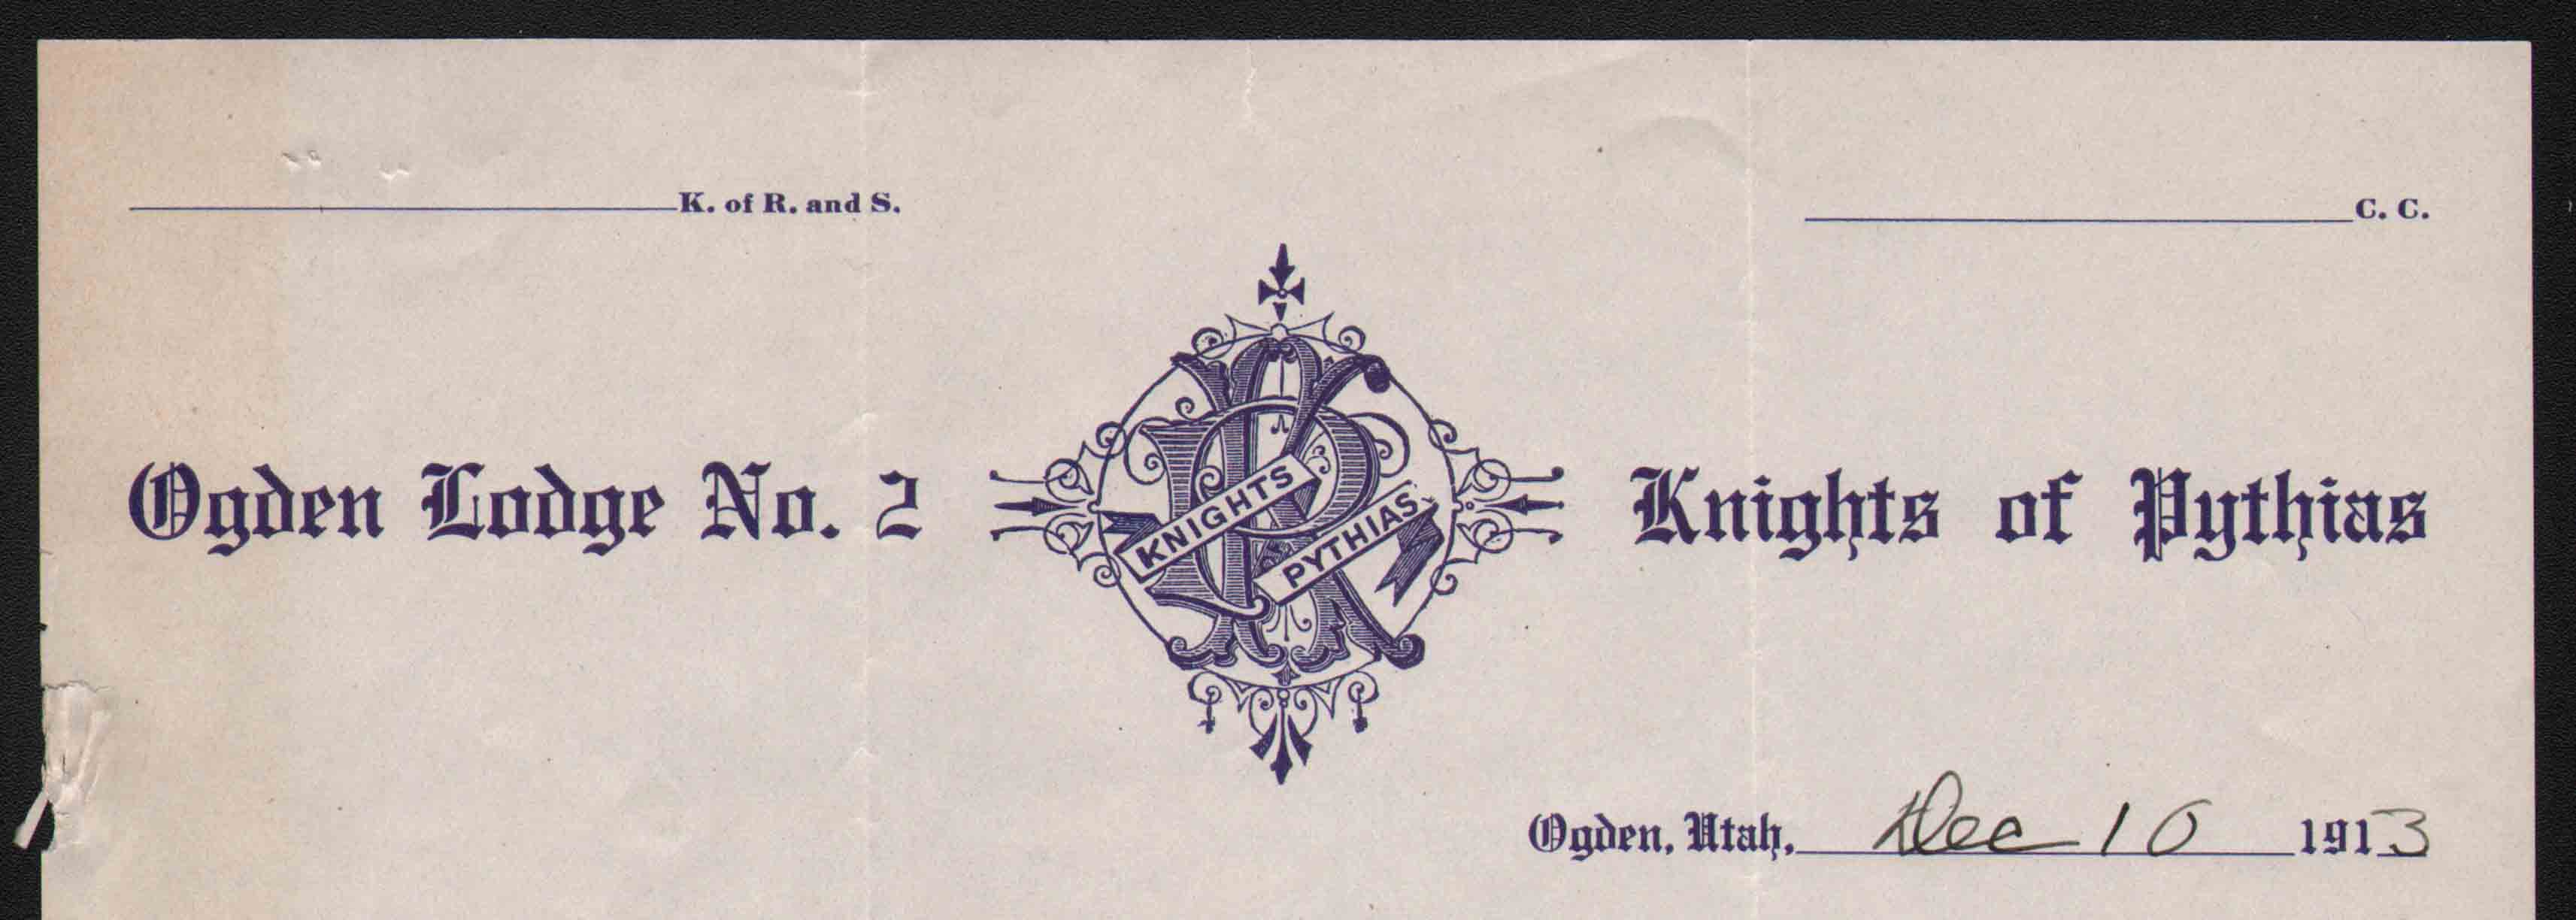 KNIGHTS_OF_PYTHIAS_1913.jpg